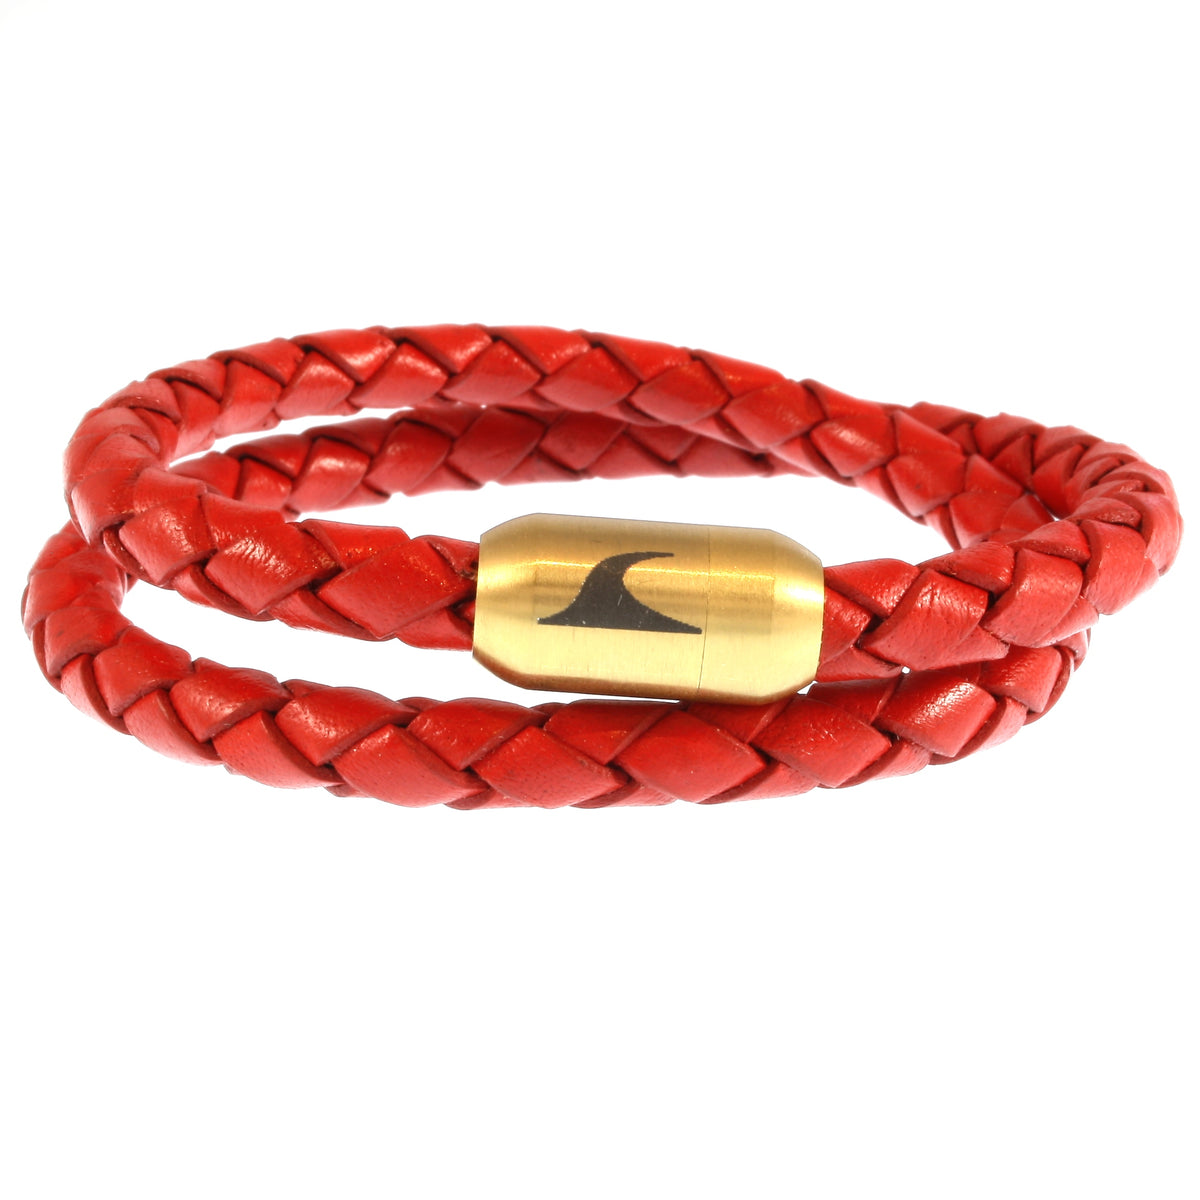 Leder-Armband-Damen-hawaii-rot-gold-geflochten-Edelstahlverschluss-vorn-wavepirate-shop-f